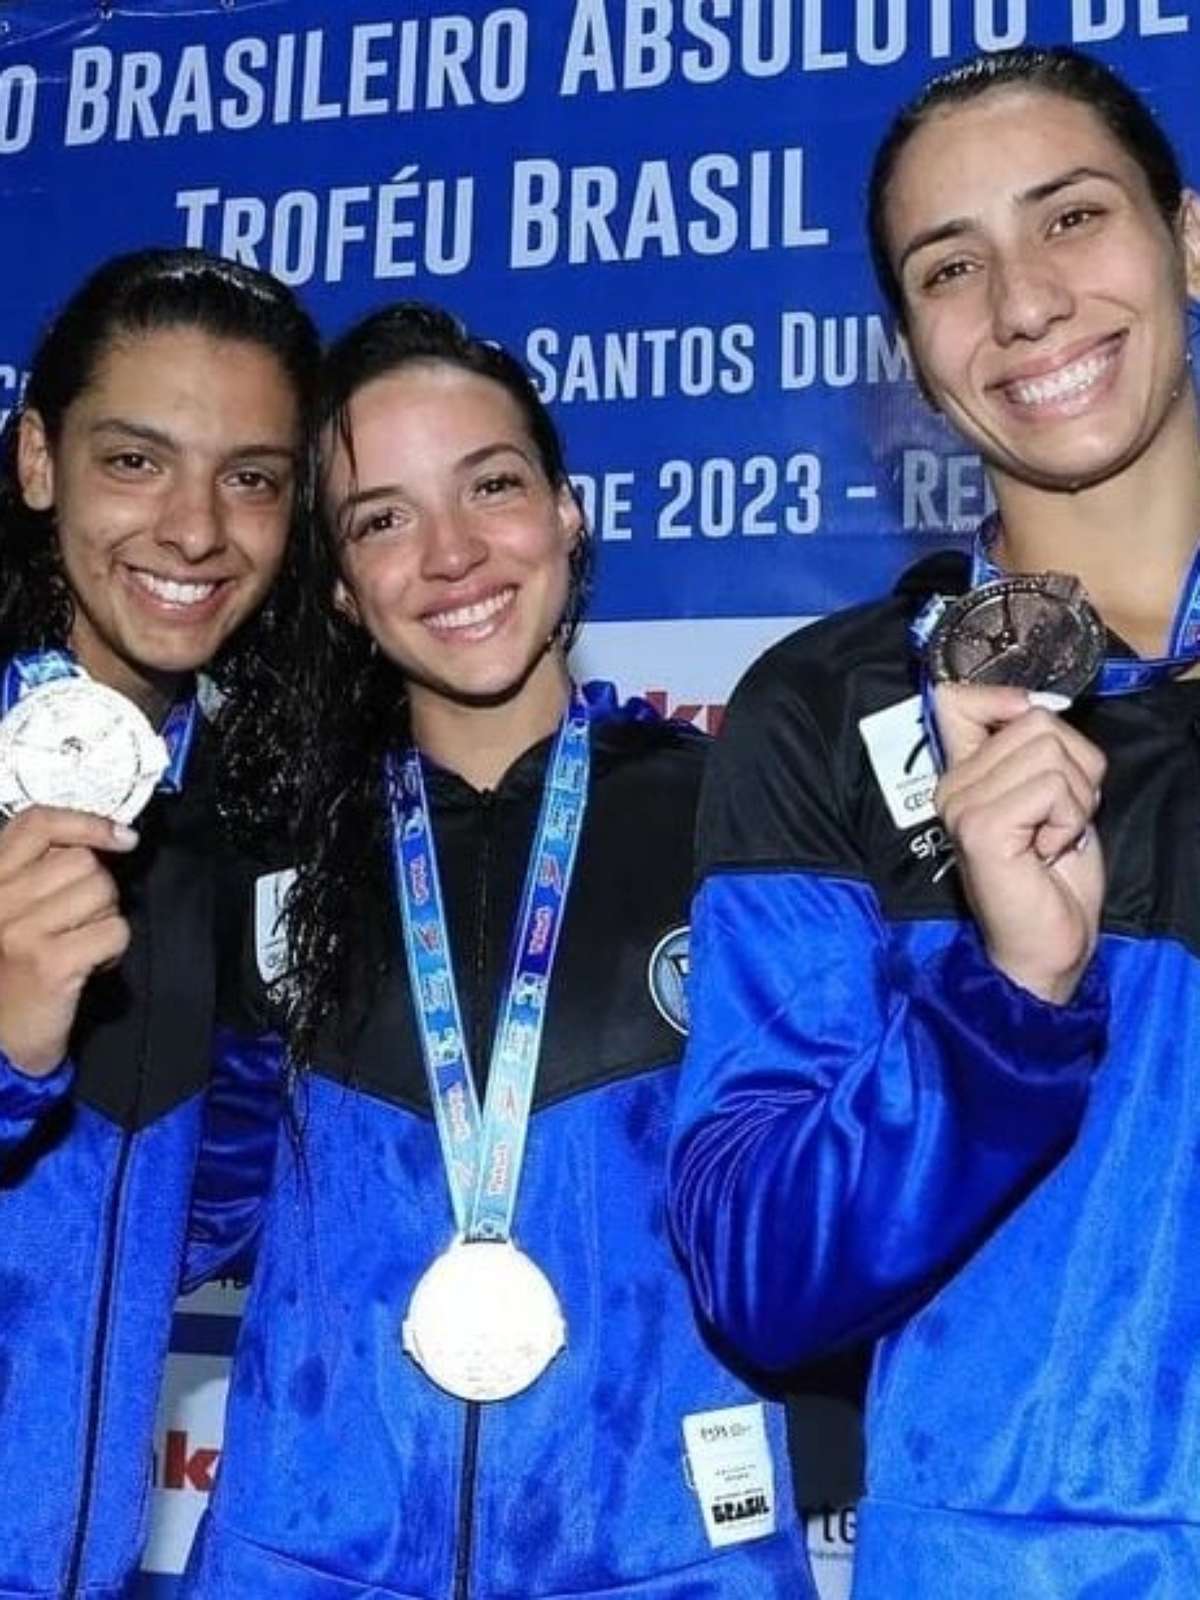 Troféu Brasil